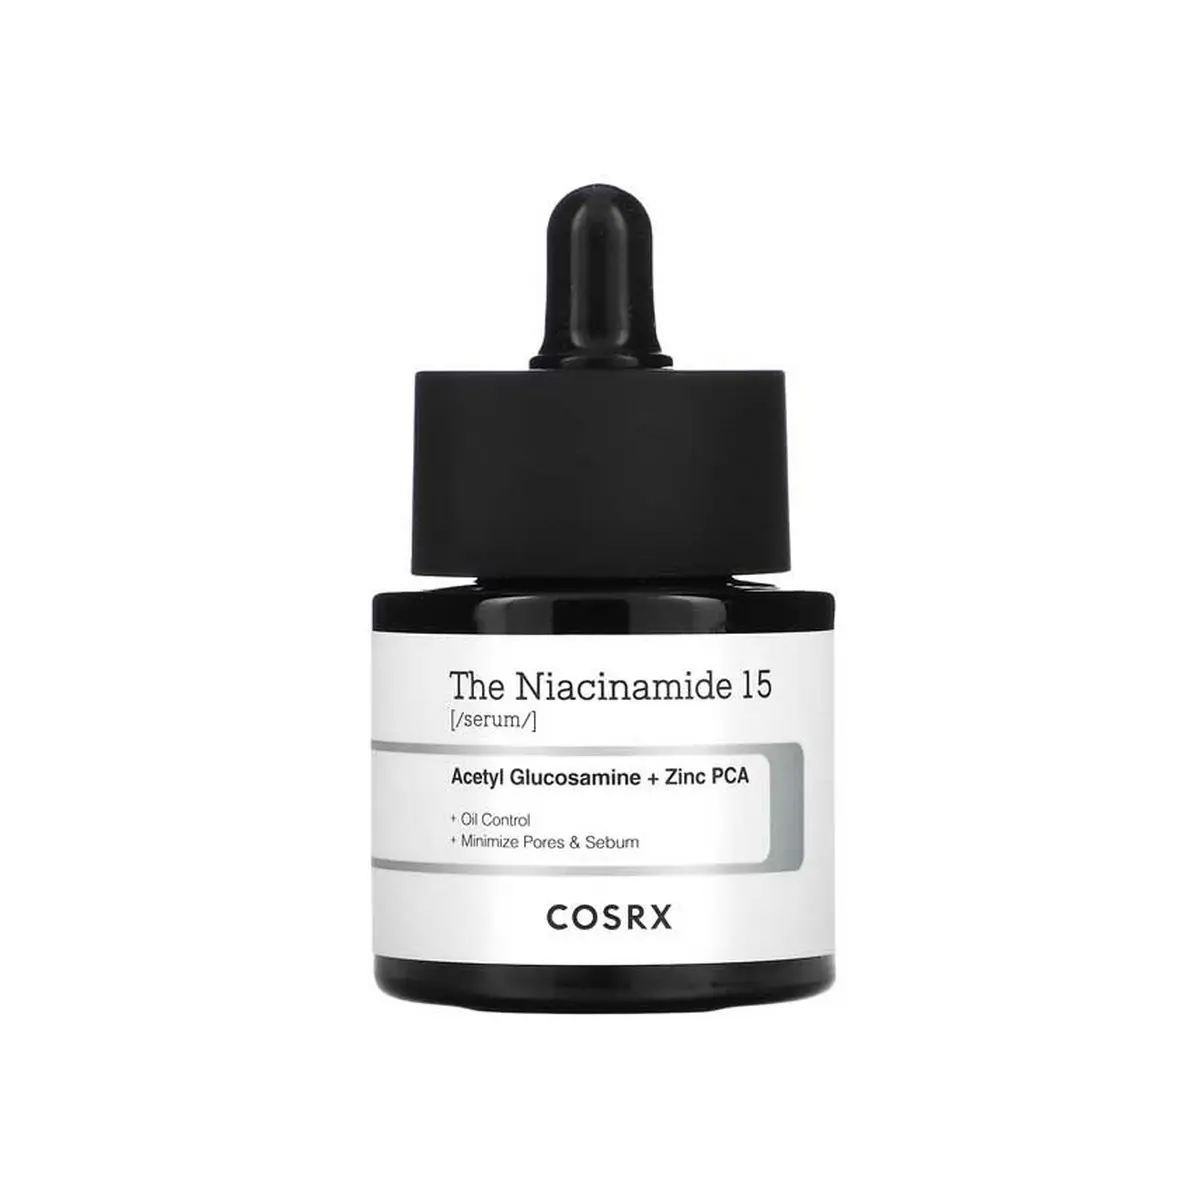 COSRX Niacinamide 15 serum 20 ml image